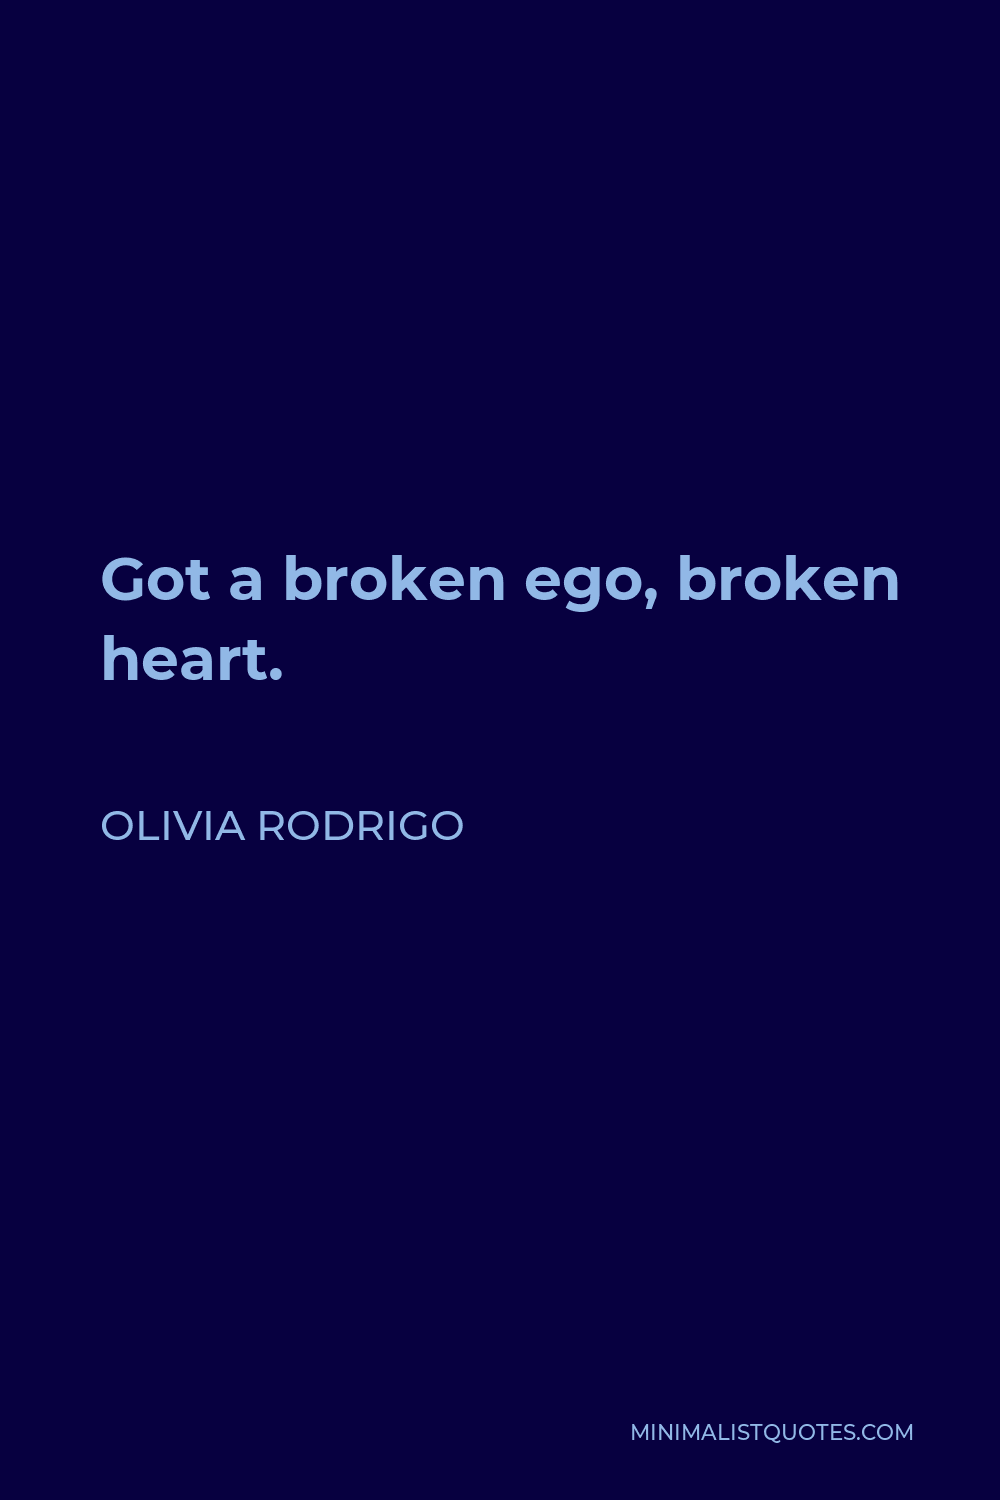 Olivia Rodrigo Quote - Got a broken ego, broken heart.